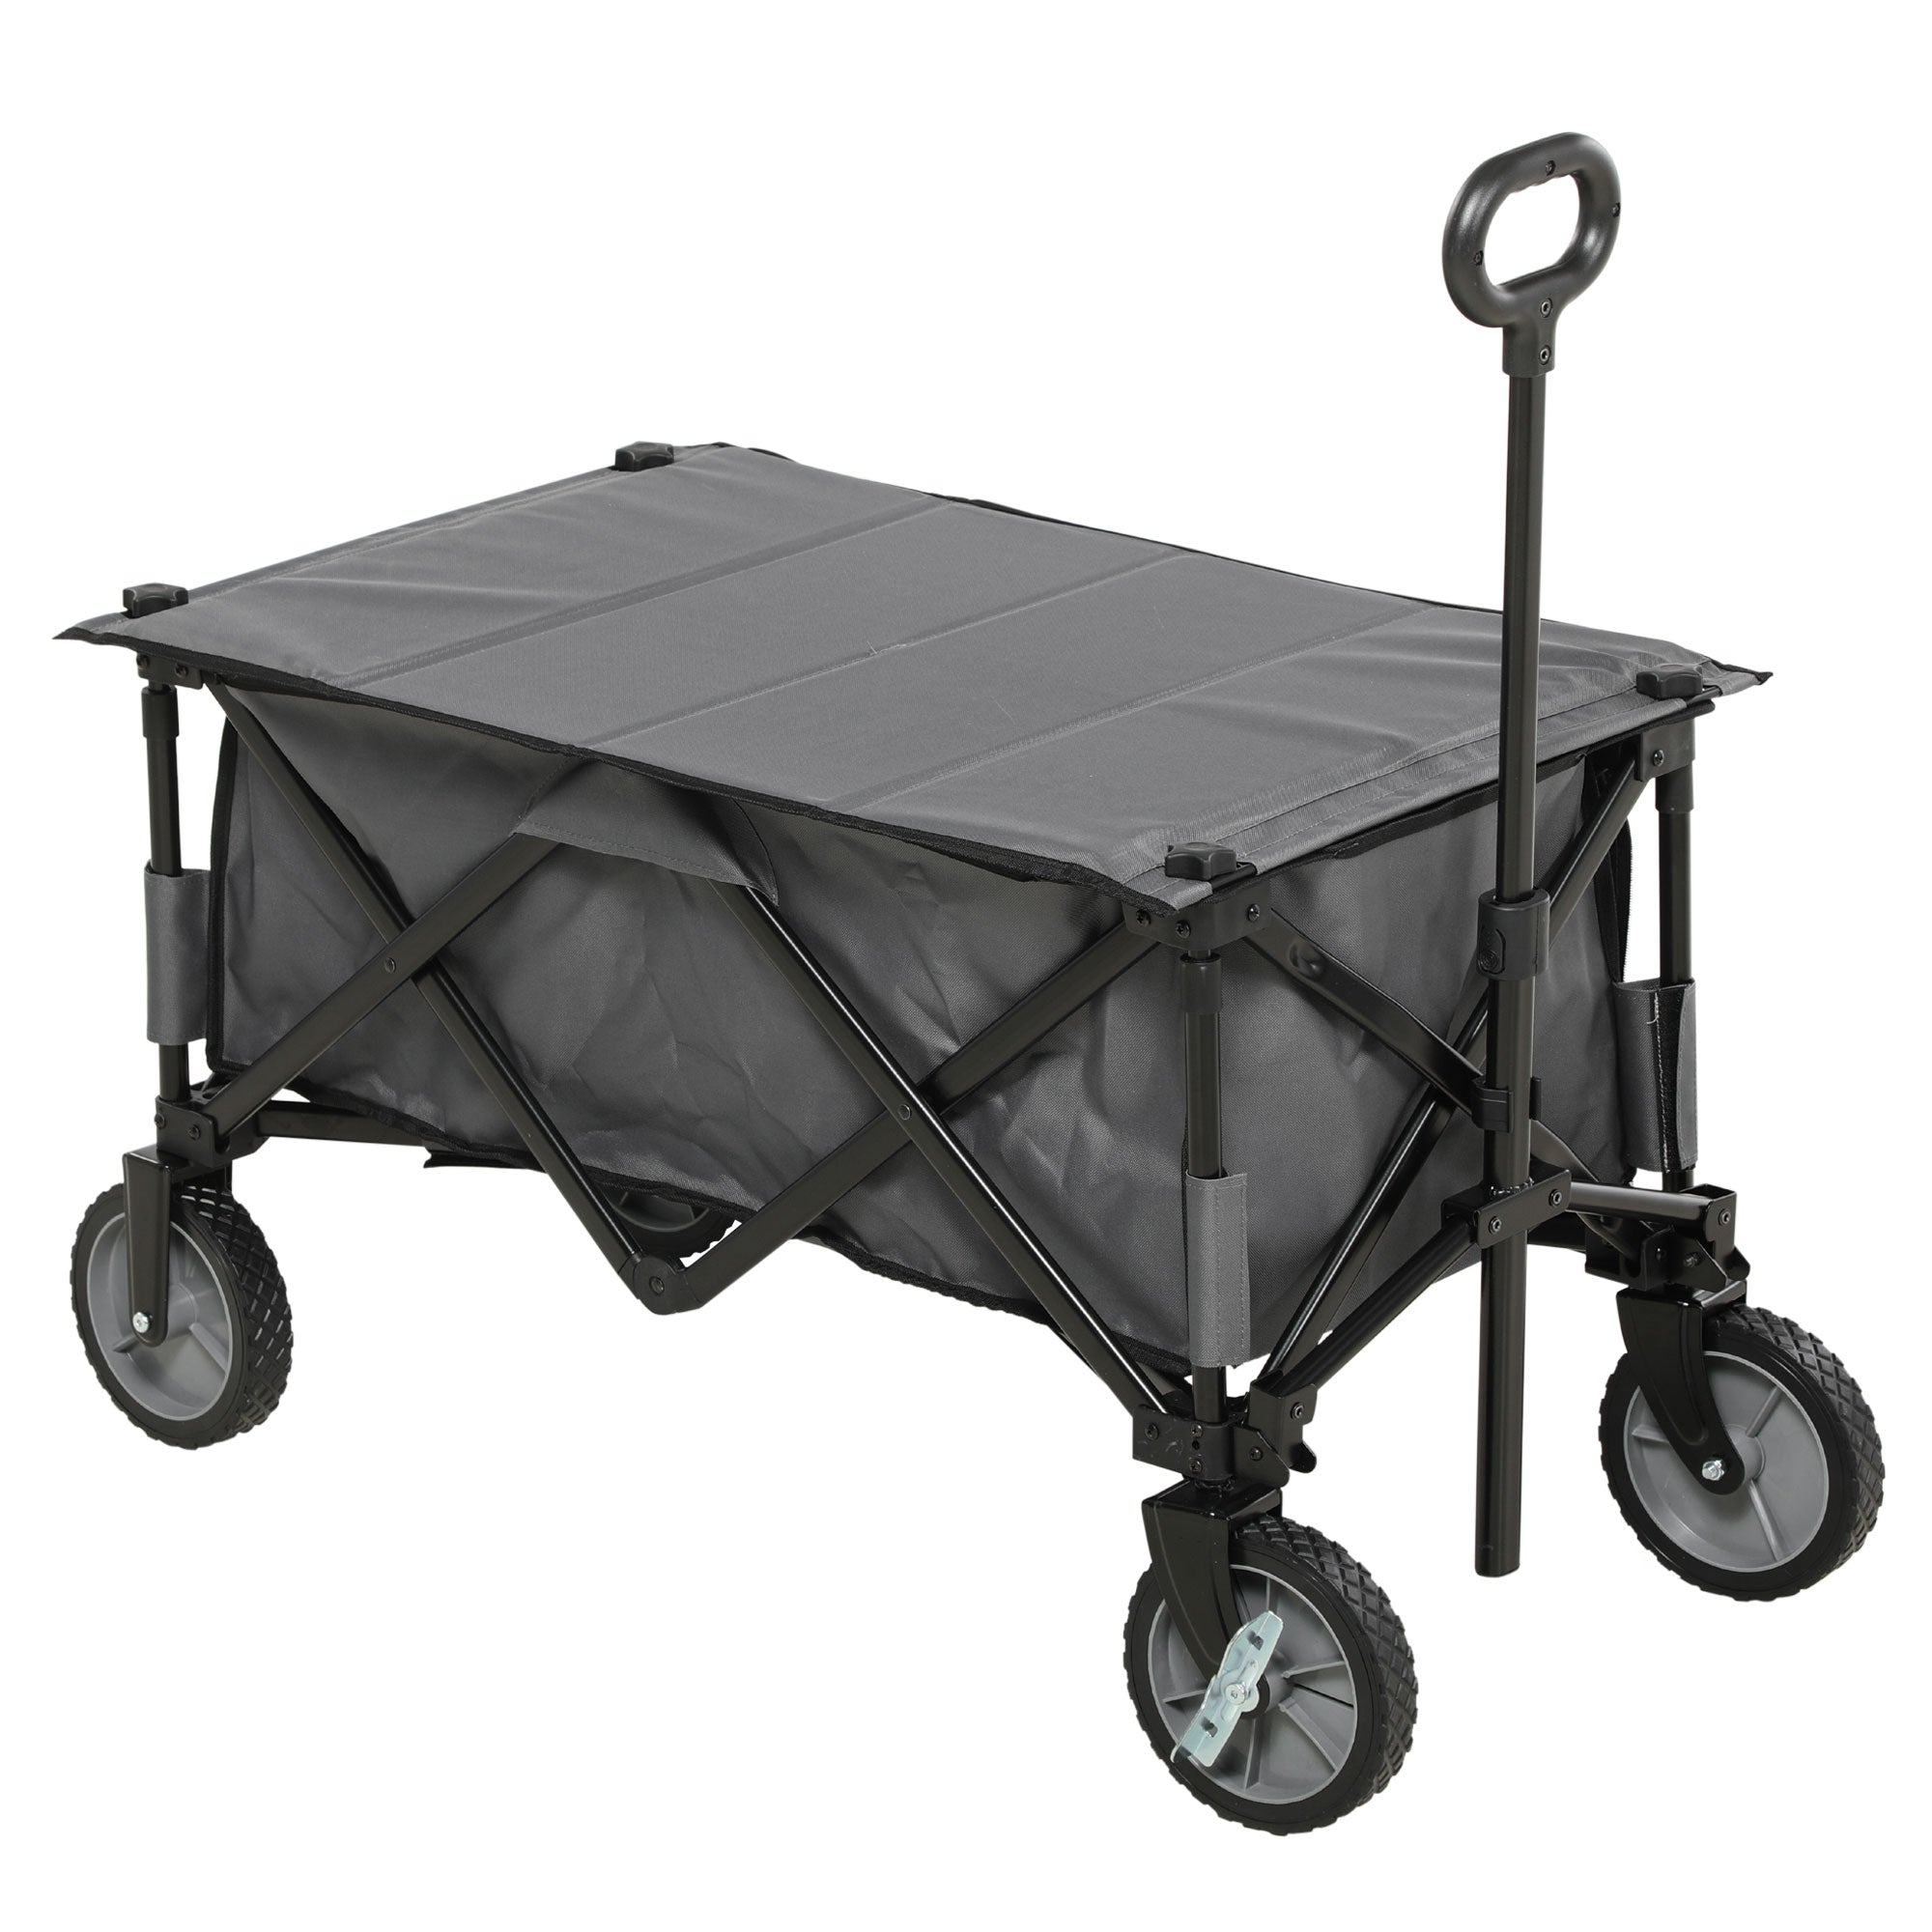 Garden Trolley, Cargo Traile on Wheels, Folding Collapsible Camping Trolley, Outdoor Utility Wagon, Dark Grey-0